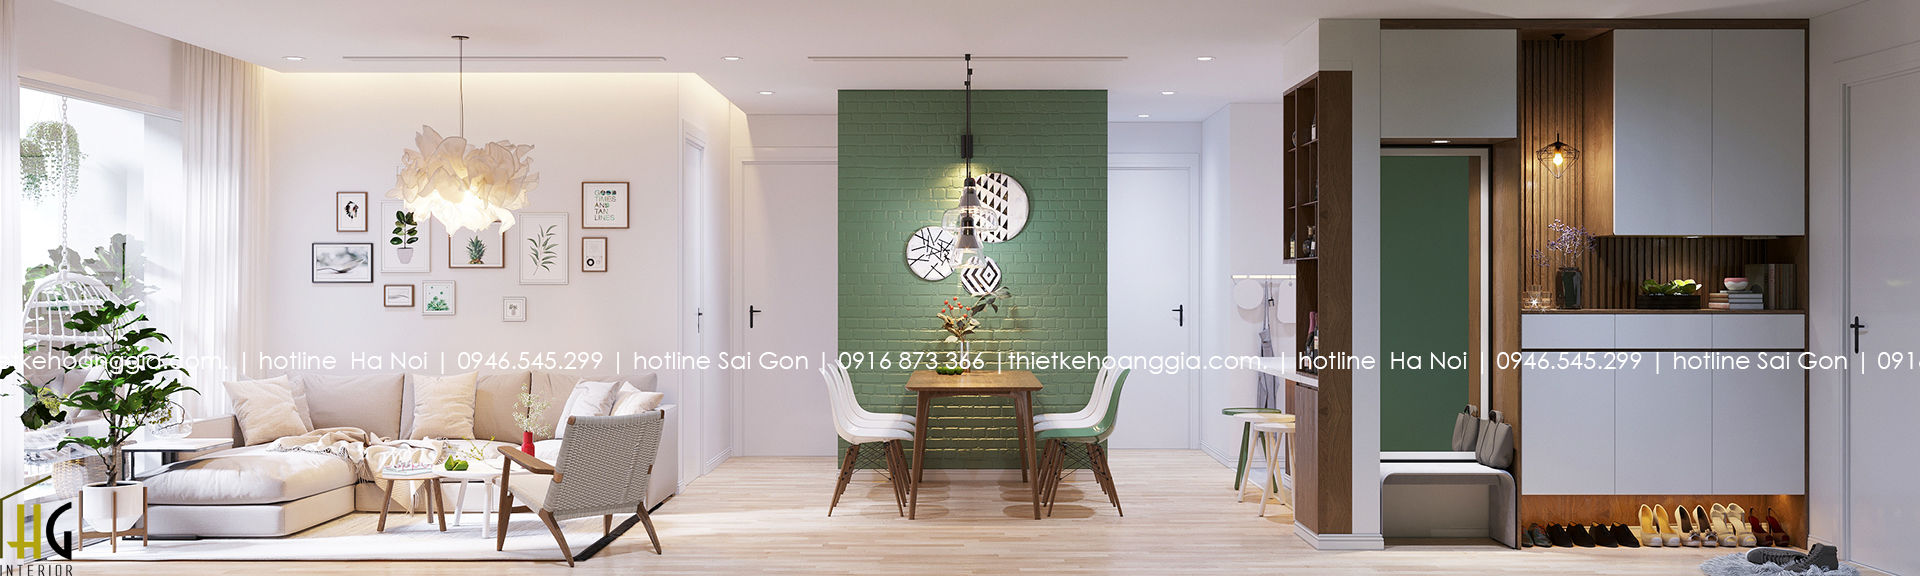 Thiết kế nội thất chung cư 55m cho chị Lan Anh, Nội Thất Hoàng Gia Nội Thất Hoàng Gia Comedores de estilo escandinavo